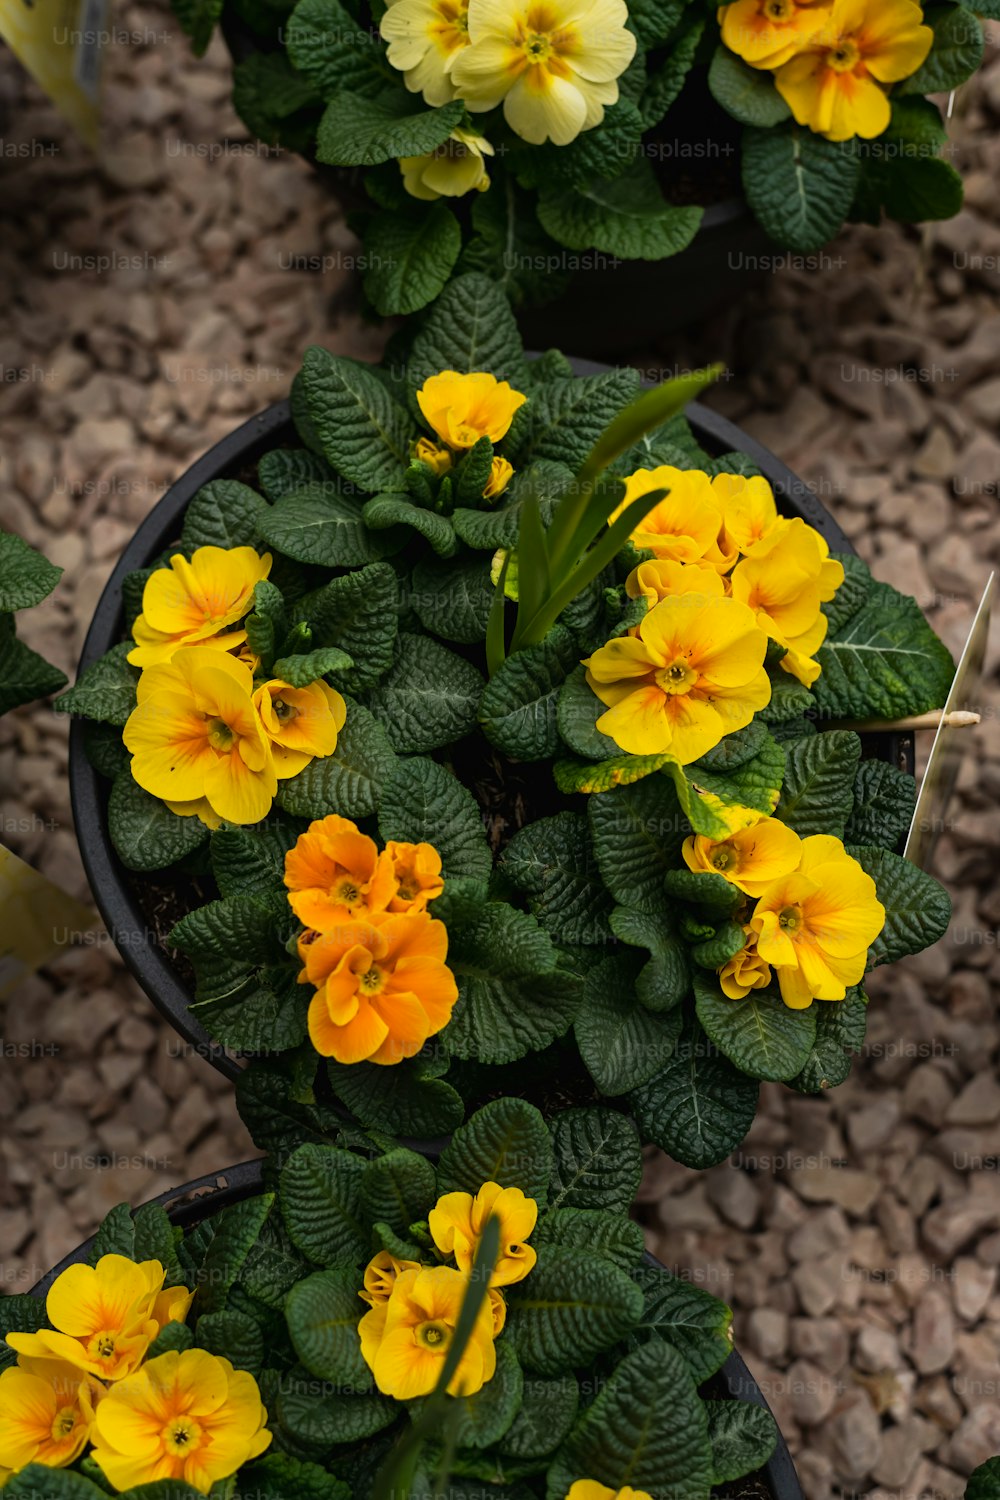 un gruppo di fiori gialli in una pentola